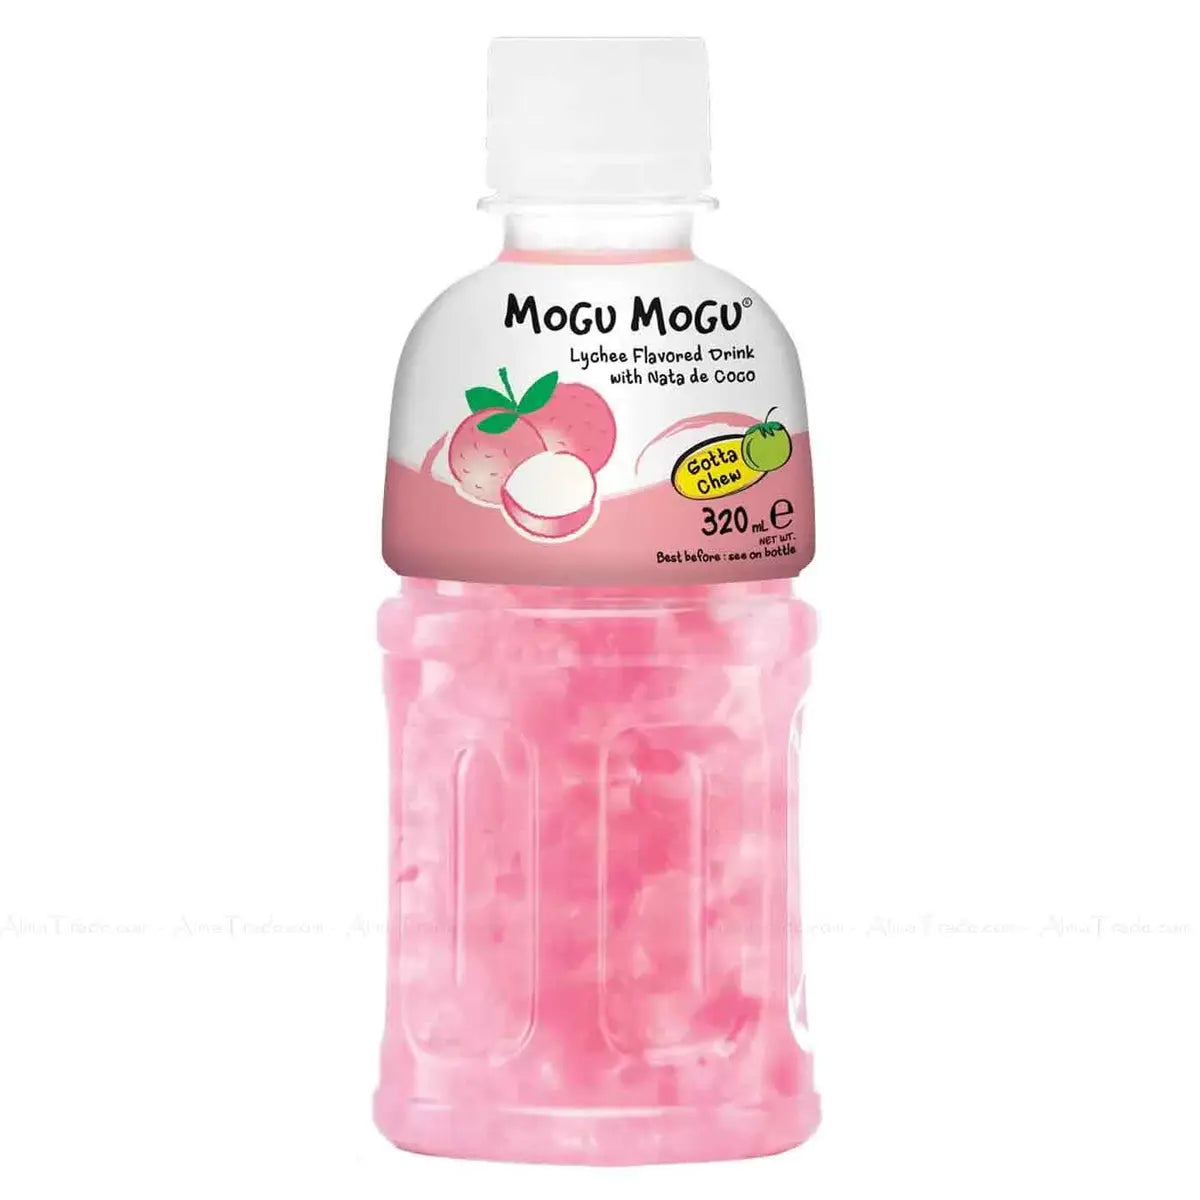 Mogu Mogu Lychee Flavored Drink With Nata de Coconut 320ml (24 pack).